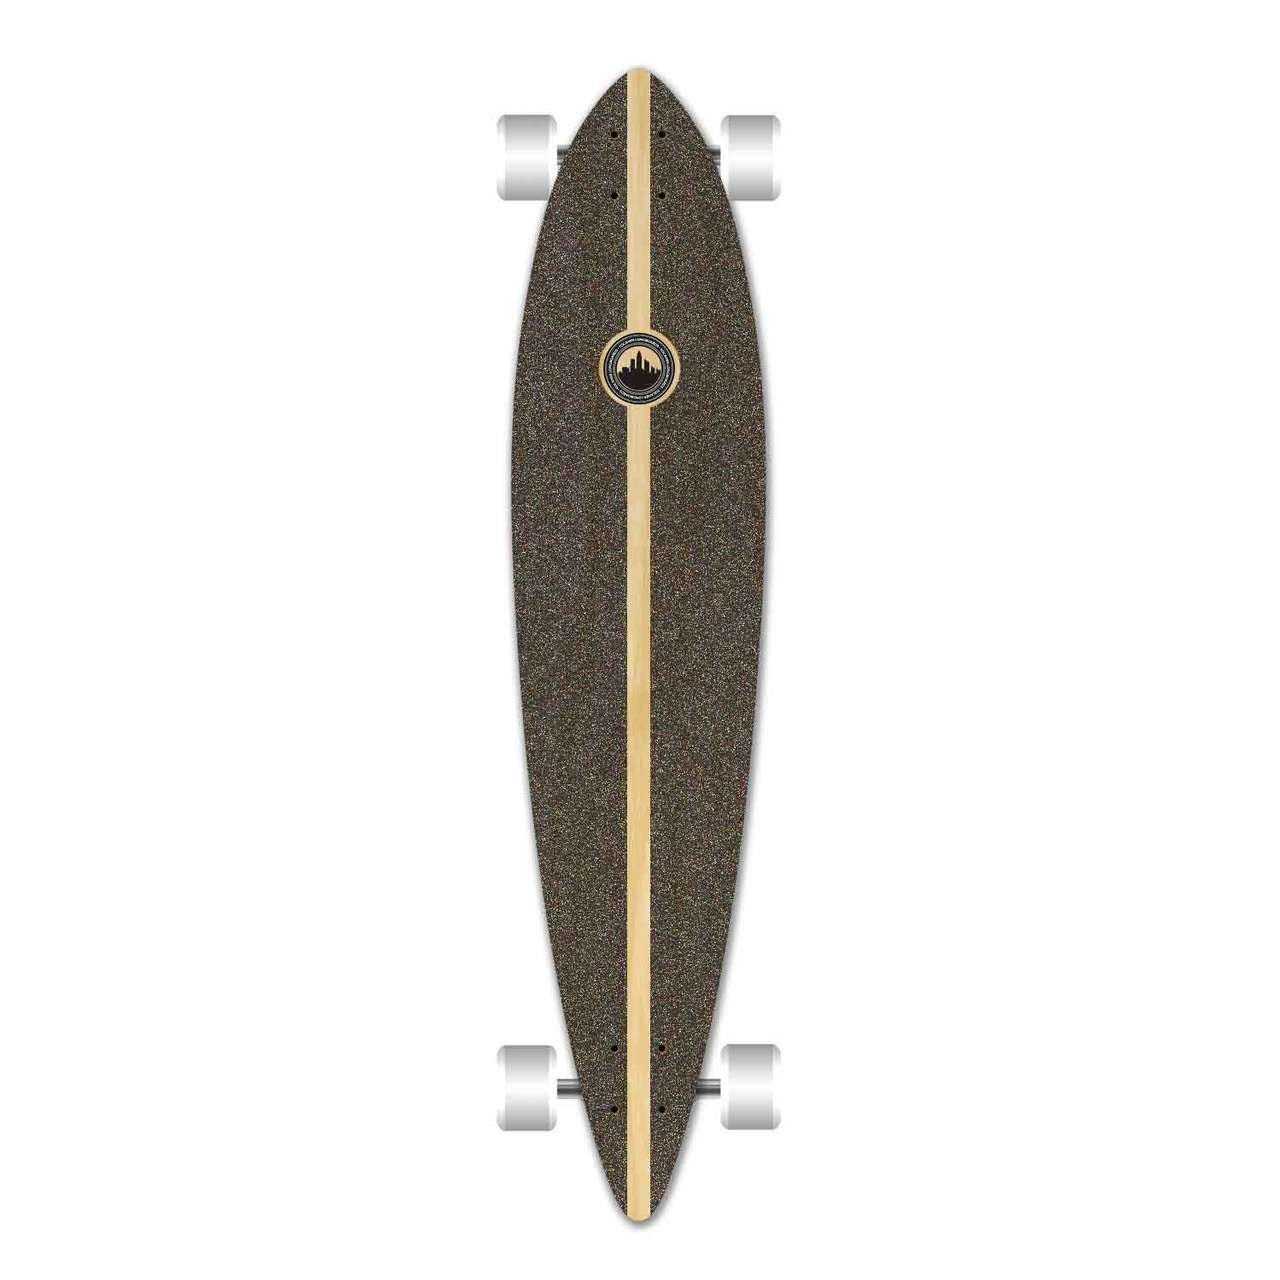 Yocaher Pintail Longboard Complete - Tiedye Original